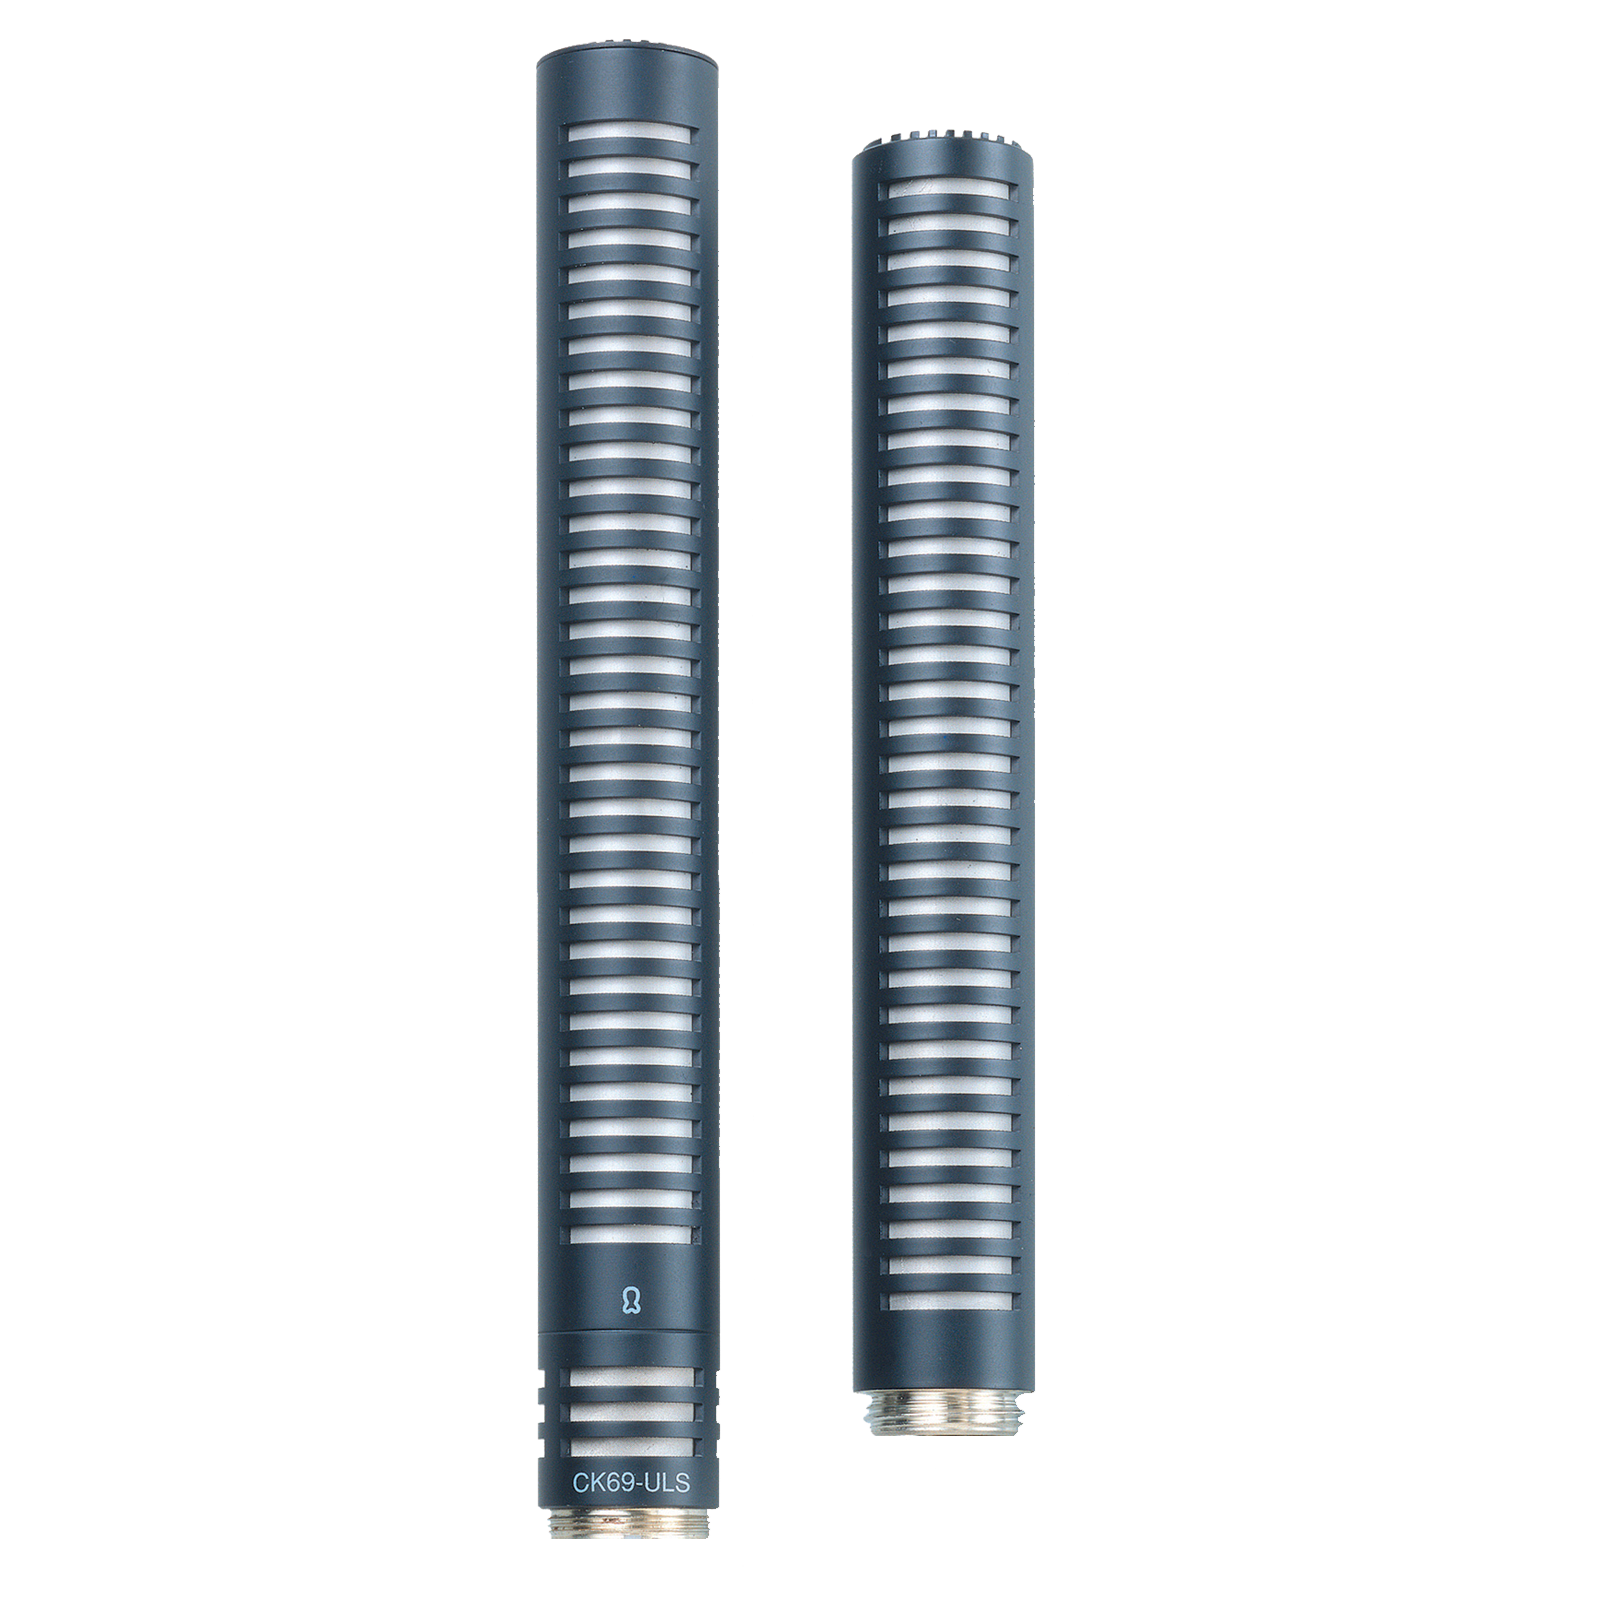 CK69 ULS - Black - Reference small condenser microphone shotgun capsule - Hero